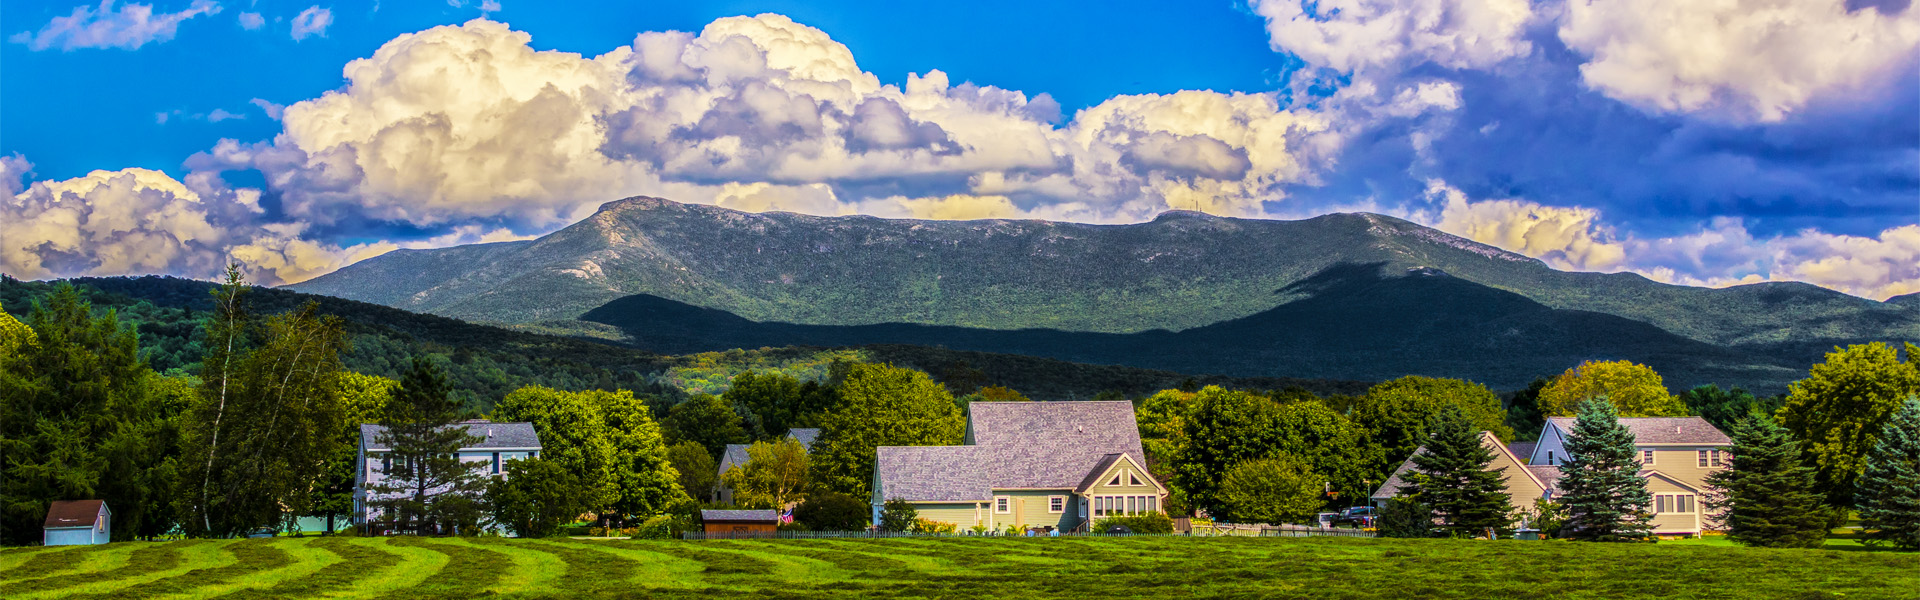 Mount Mansfield Vermont in the summer.